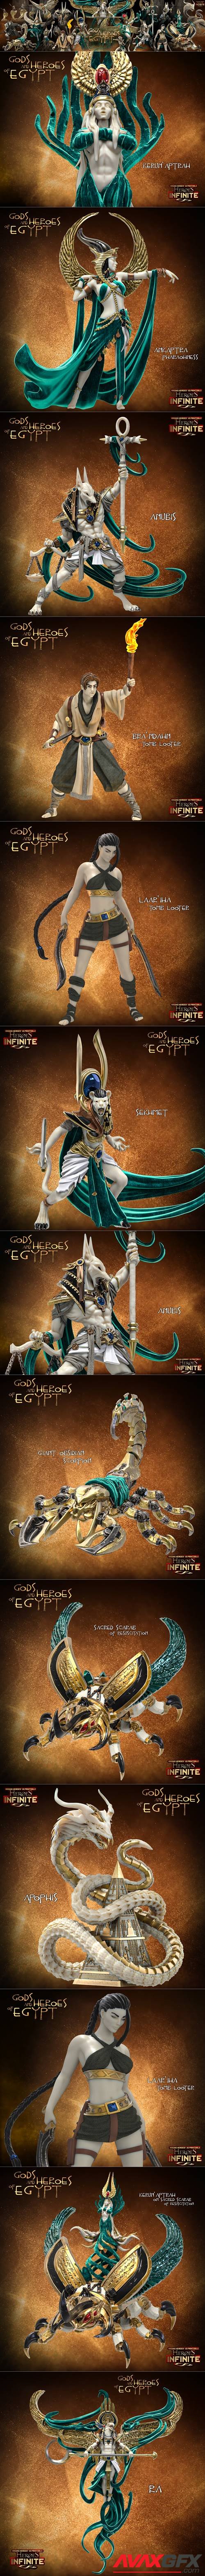 Heroes Infinite Gods and Heroes of Egypt – 3D Printable STL